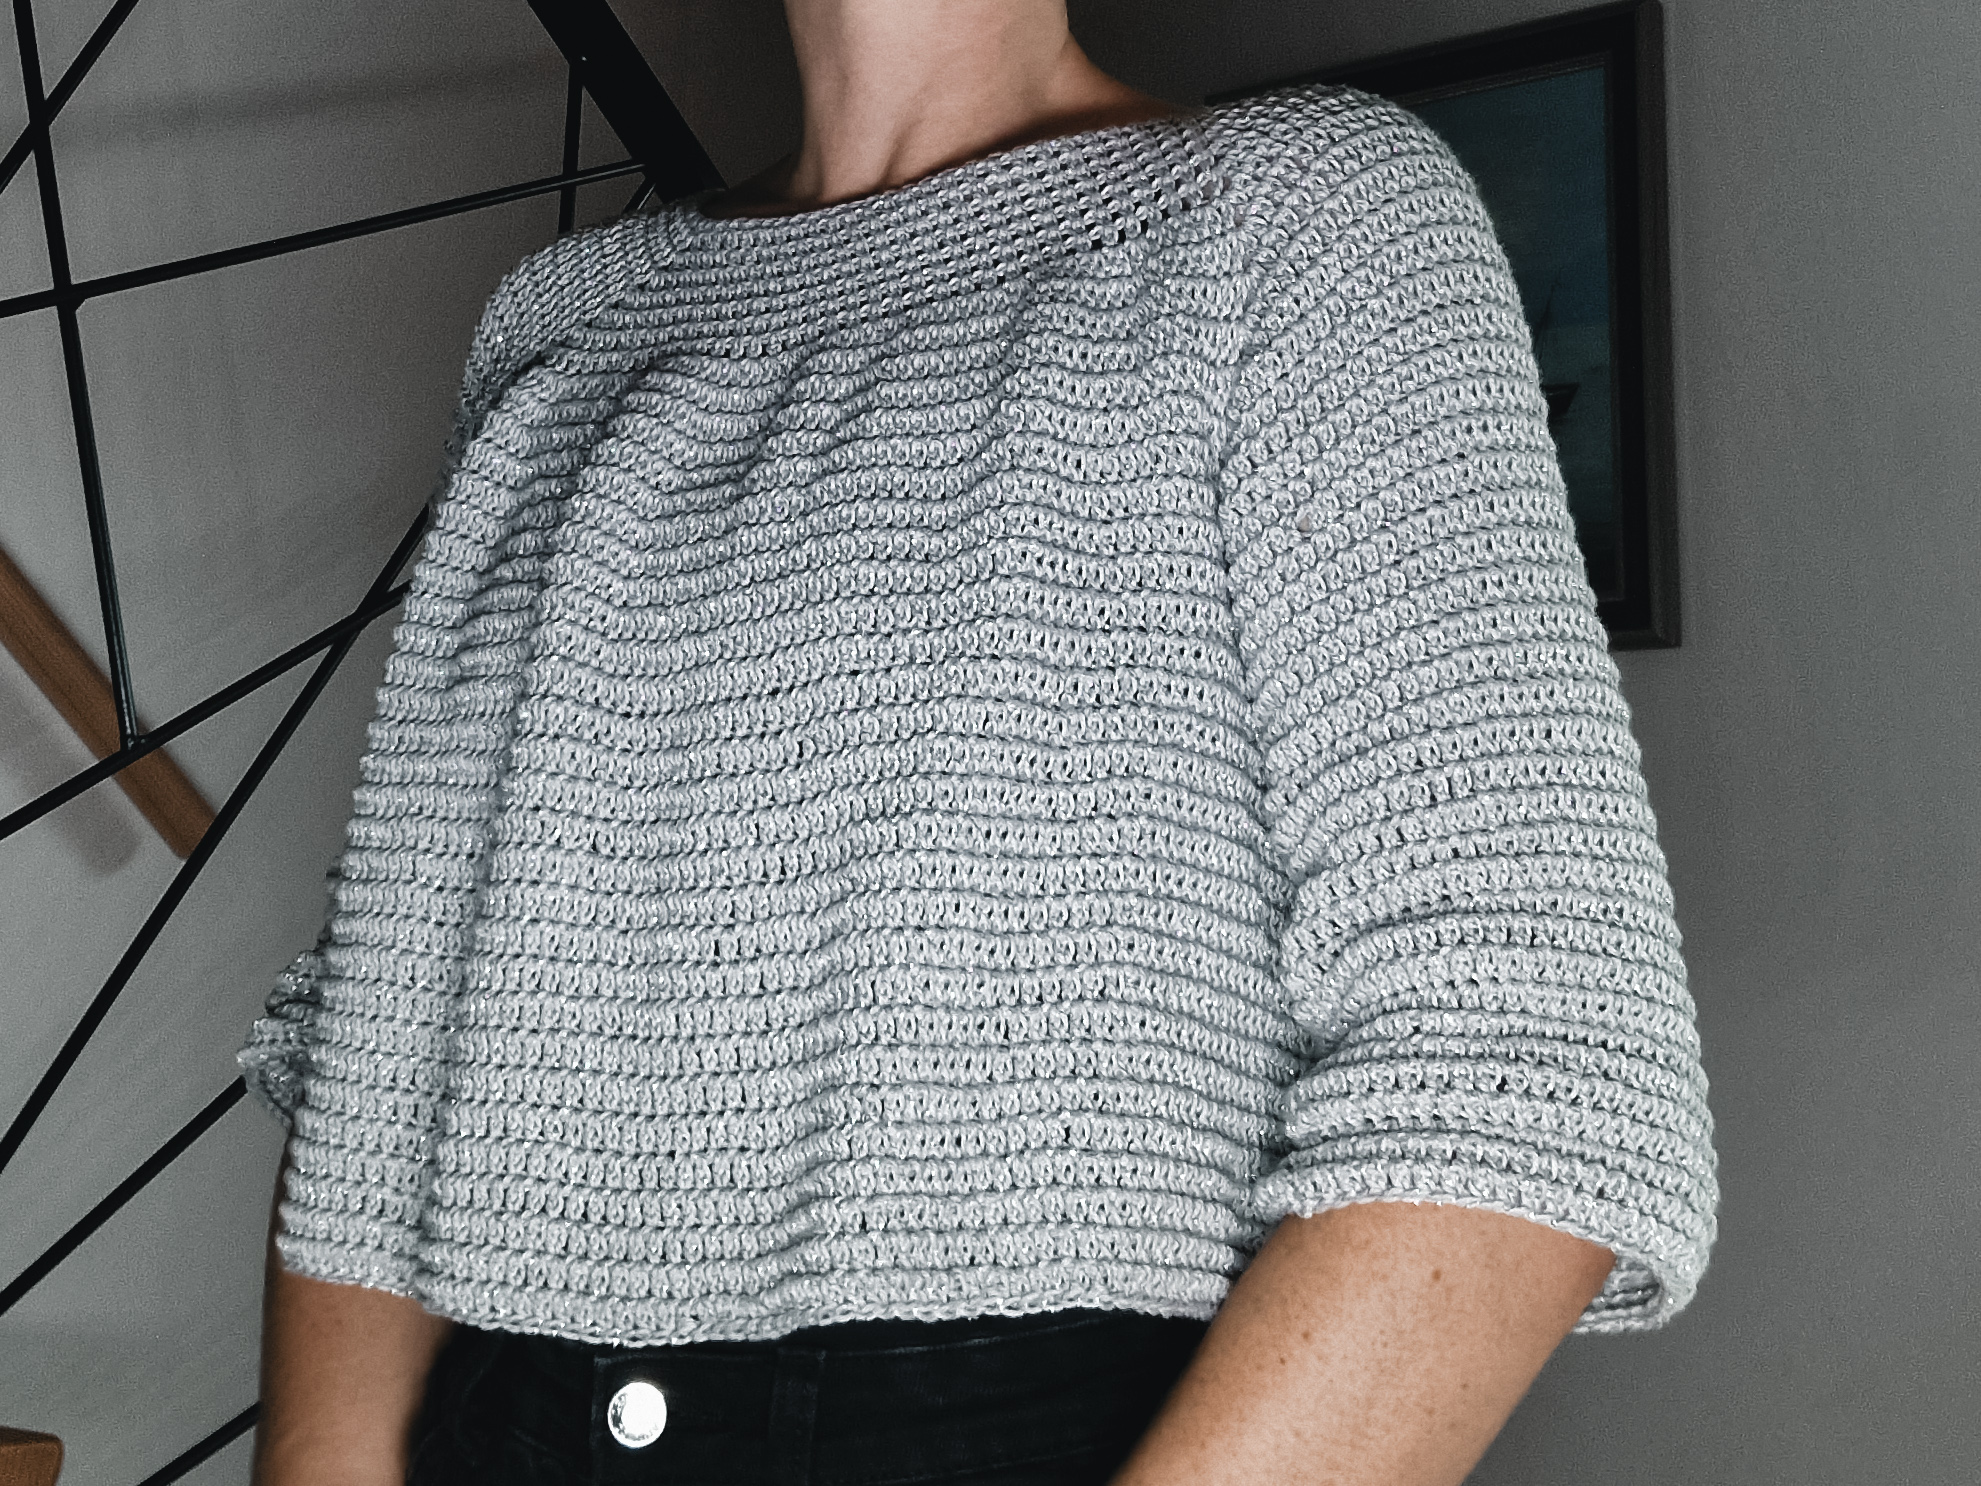 How to crochet Cropped Ruffle Raglan Sweater